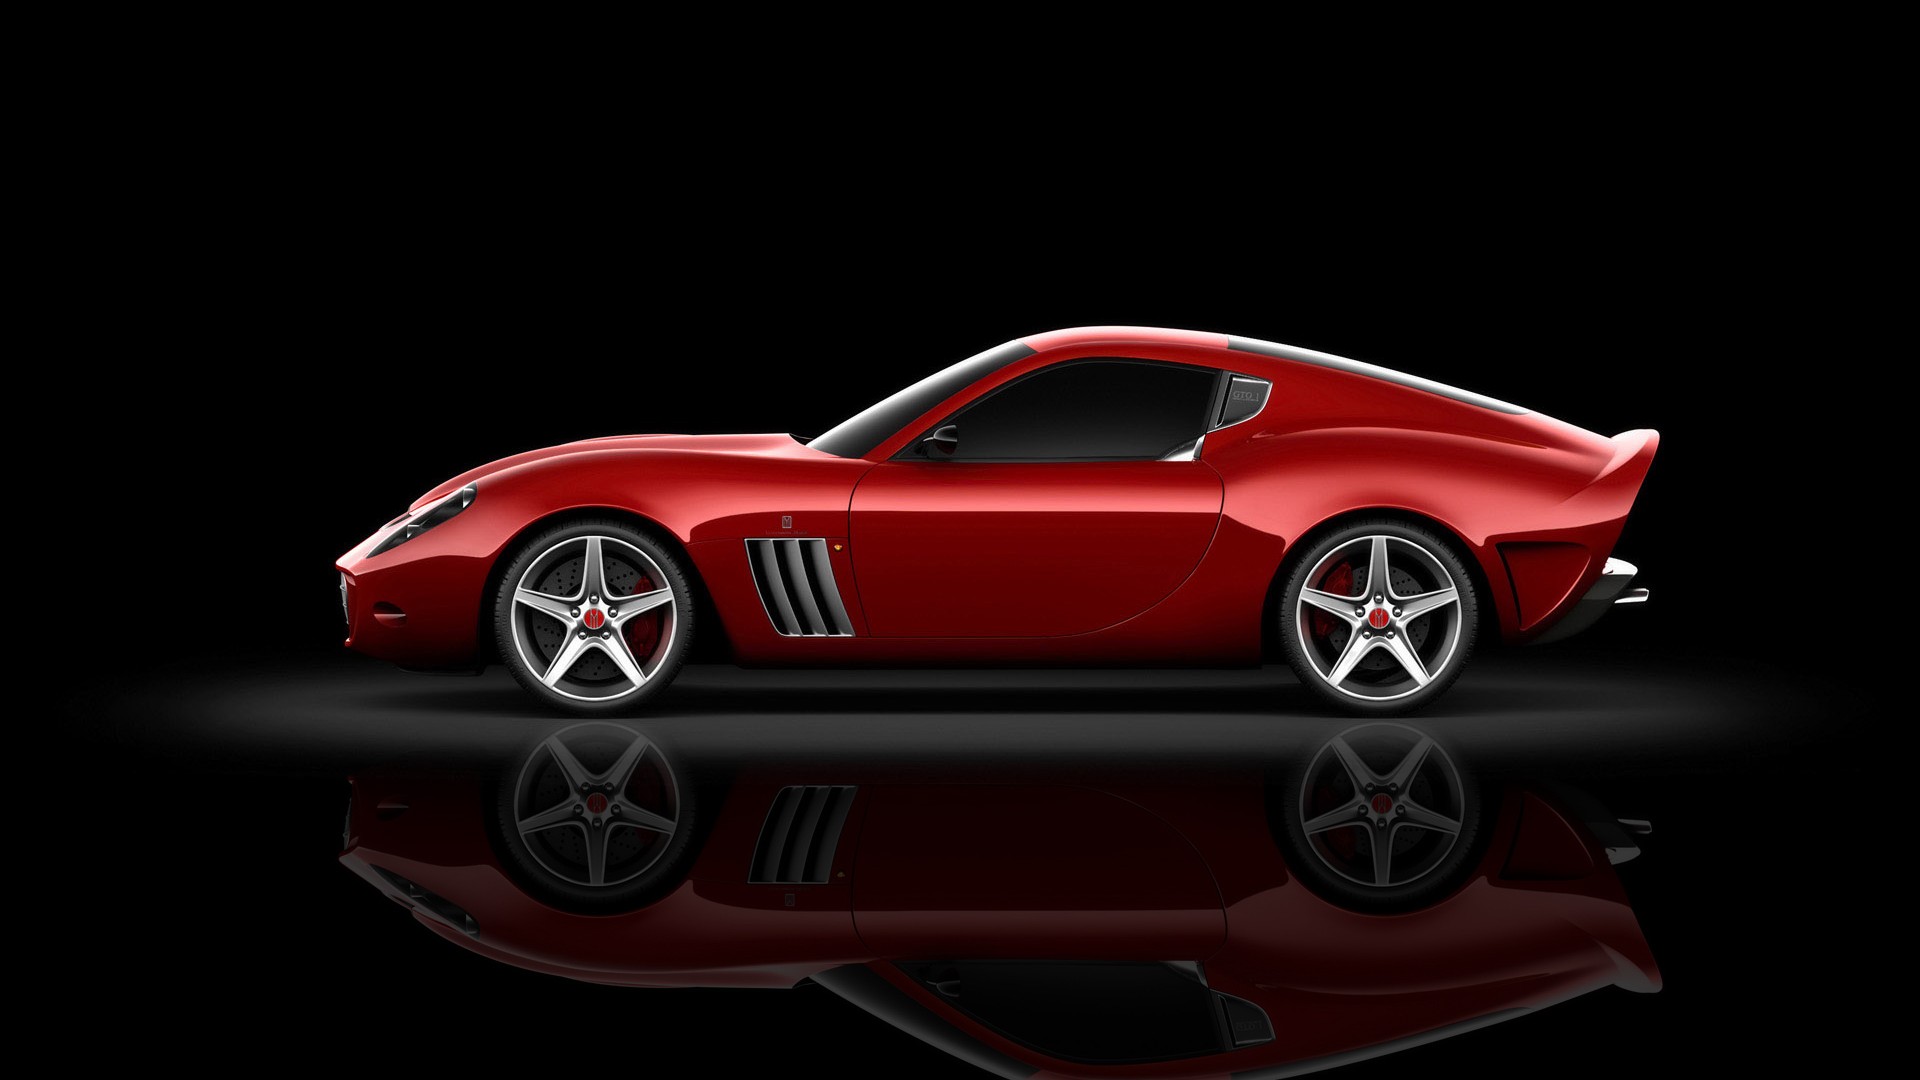 Red Maserati HD Image Cars